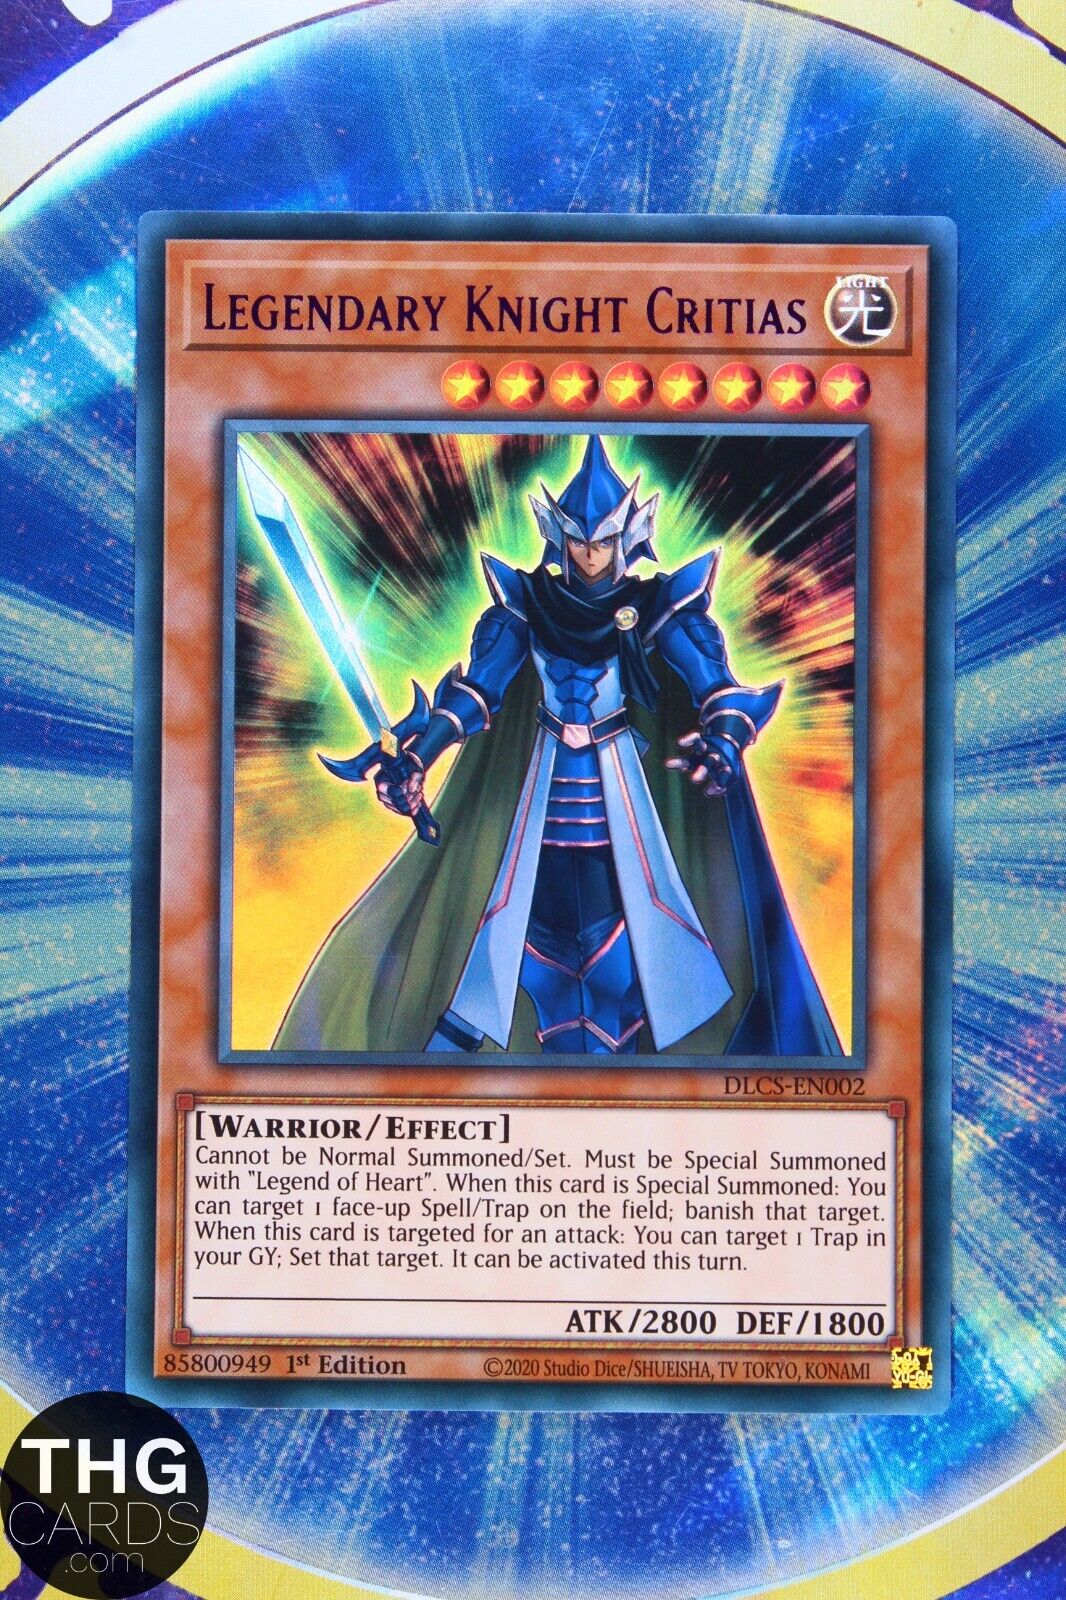 Legendary Knight Critias DLCS-EN002 1st Edition Purple Ultra Rare Yugioh Card